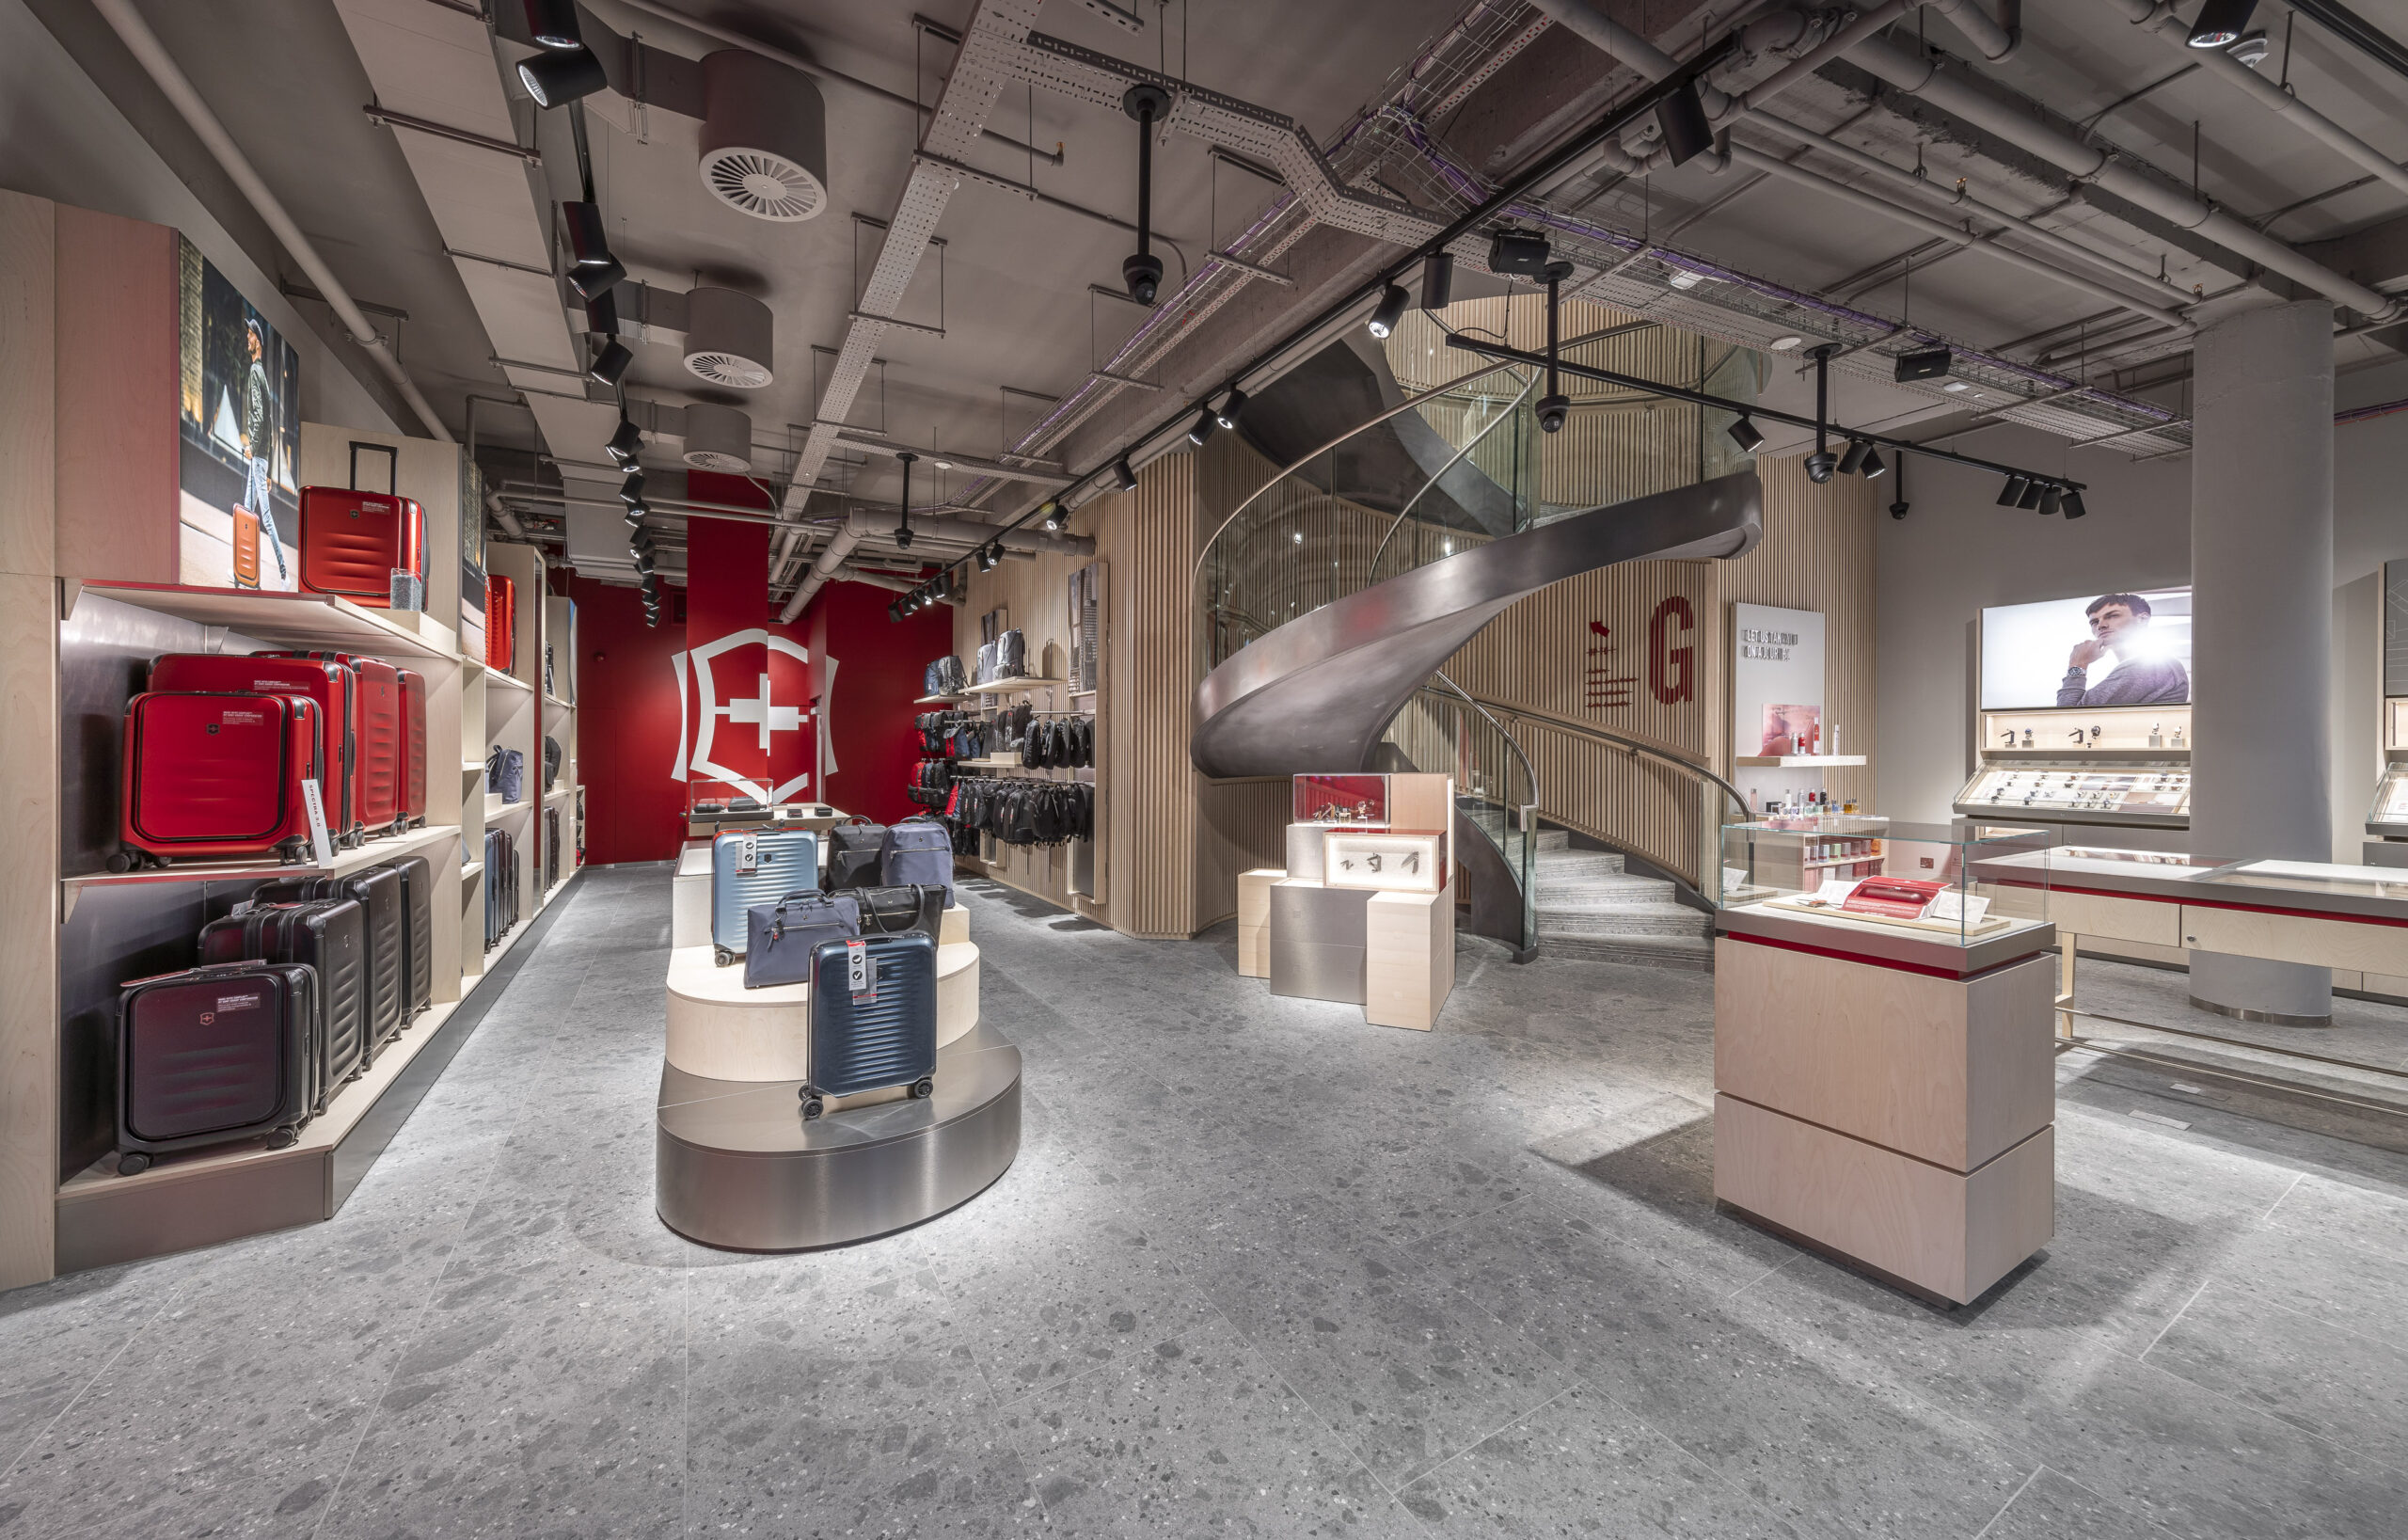 Victorinox returns to London with new design concept - Retail Focus -  Retail Design